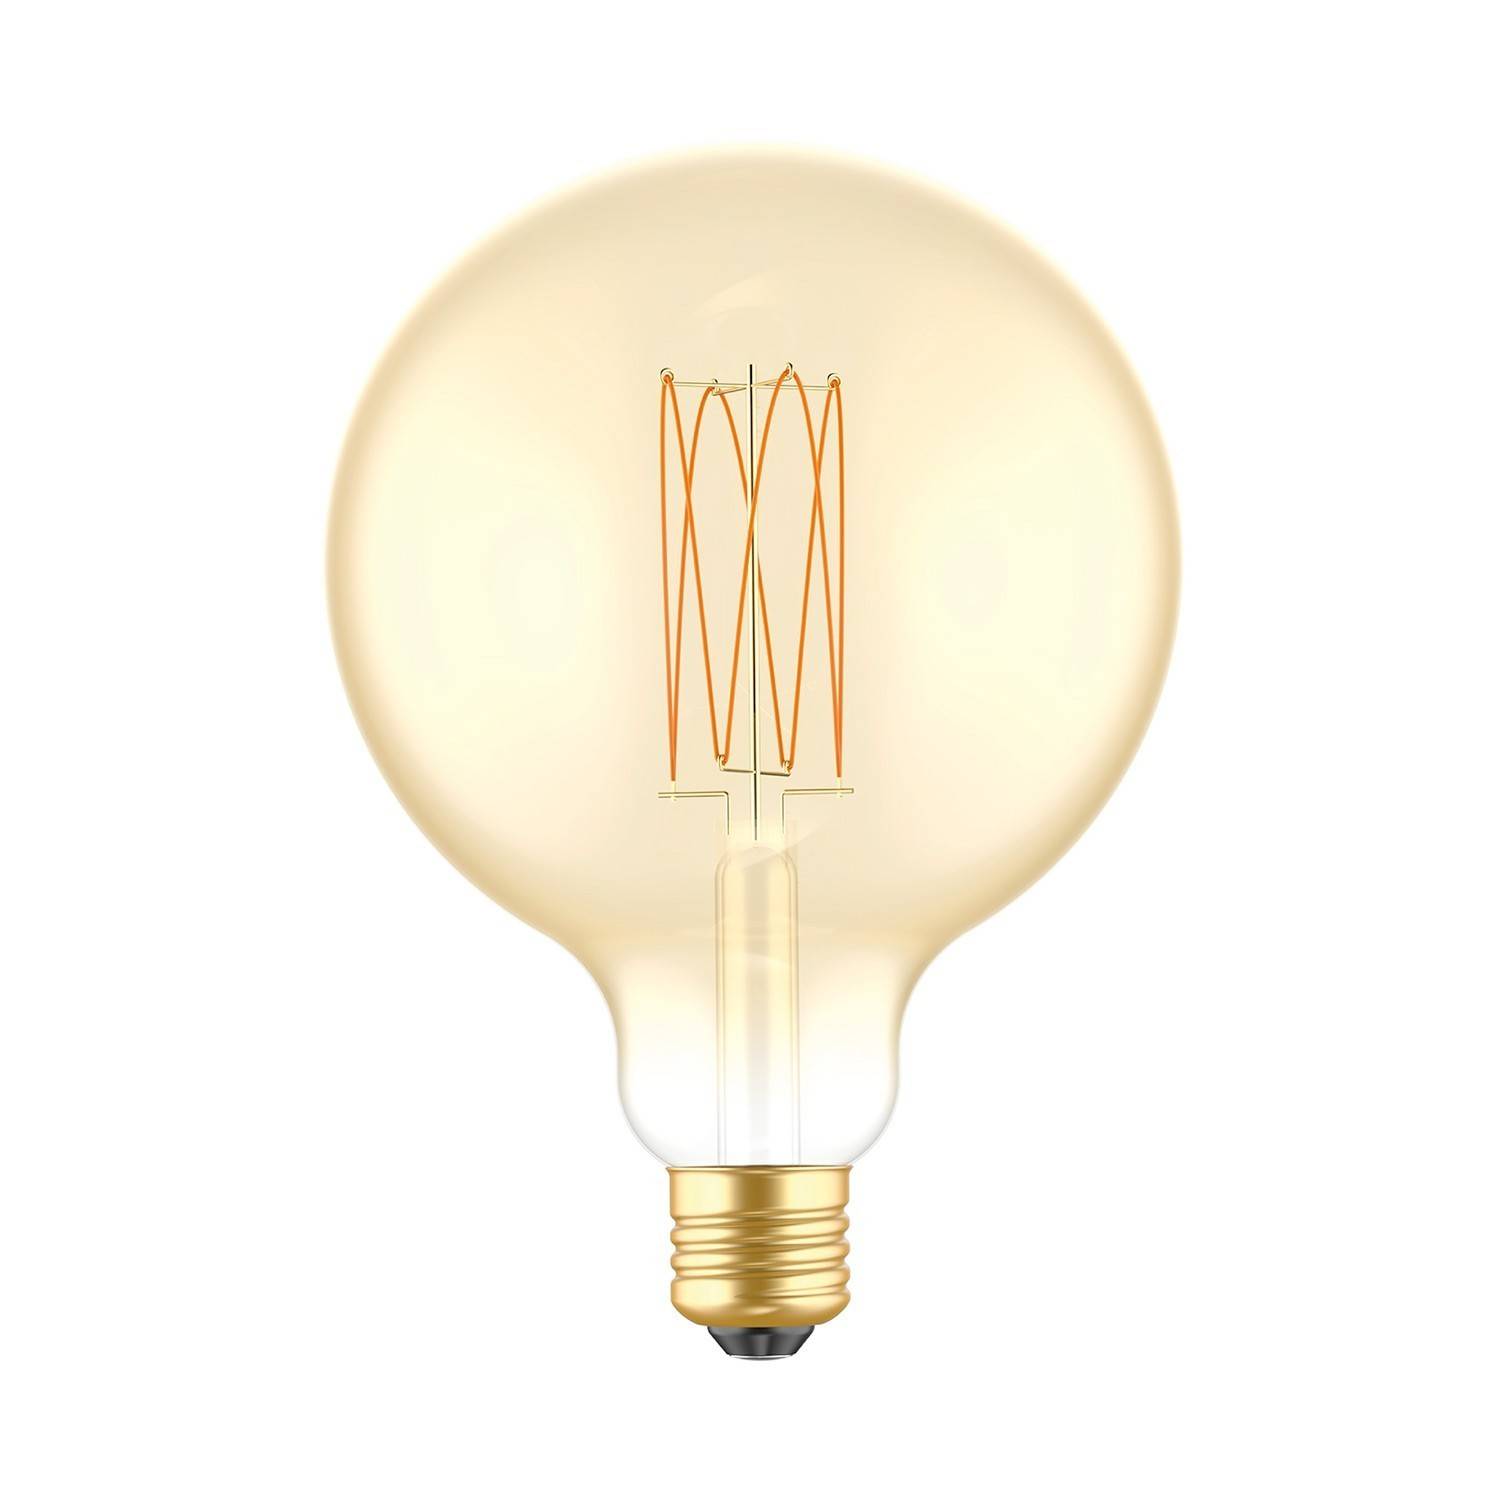 Bec cu LED cu filament din carbon, cu lumină aurie, tip glob G125 7W 640Lm E27 2700K, reglabil - C56